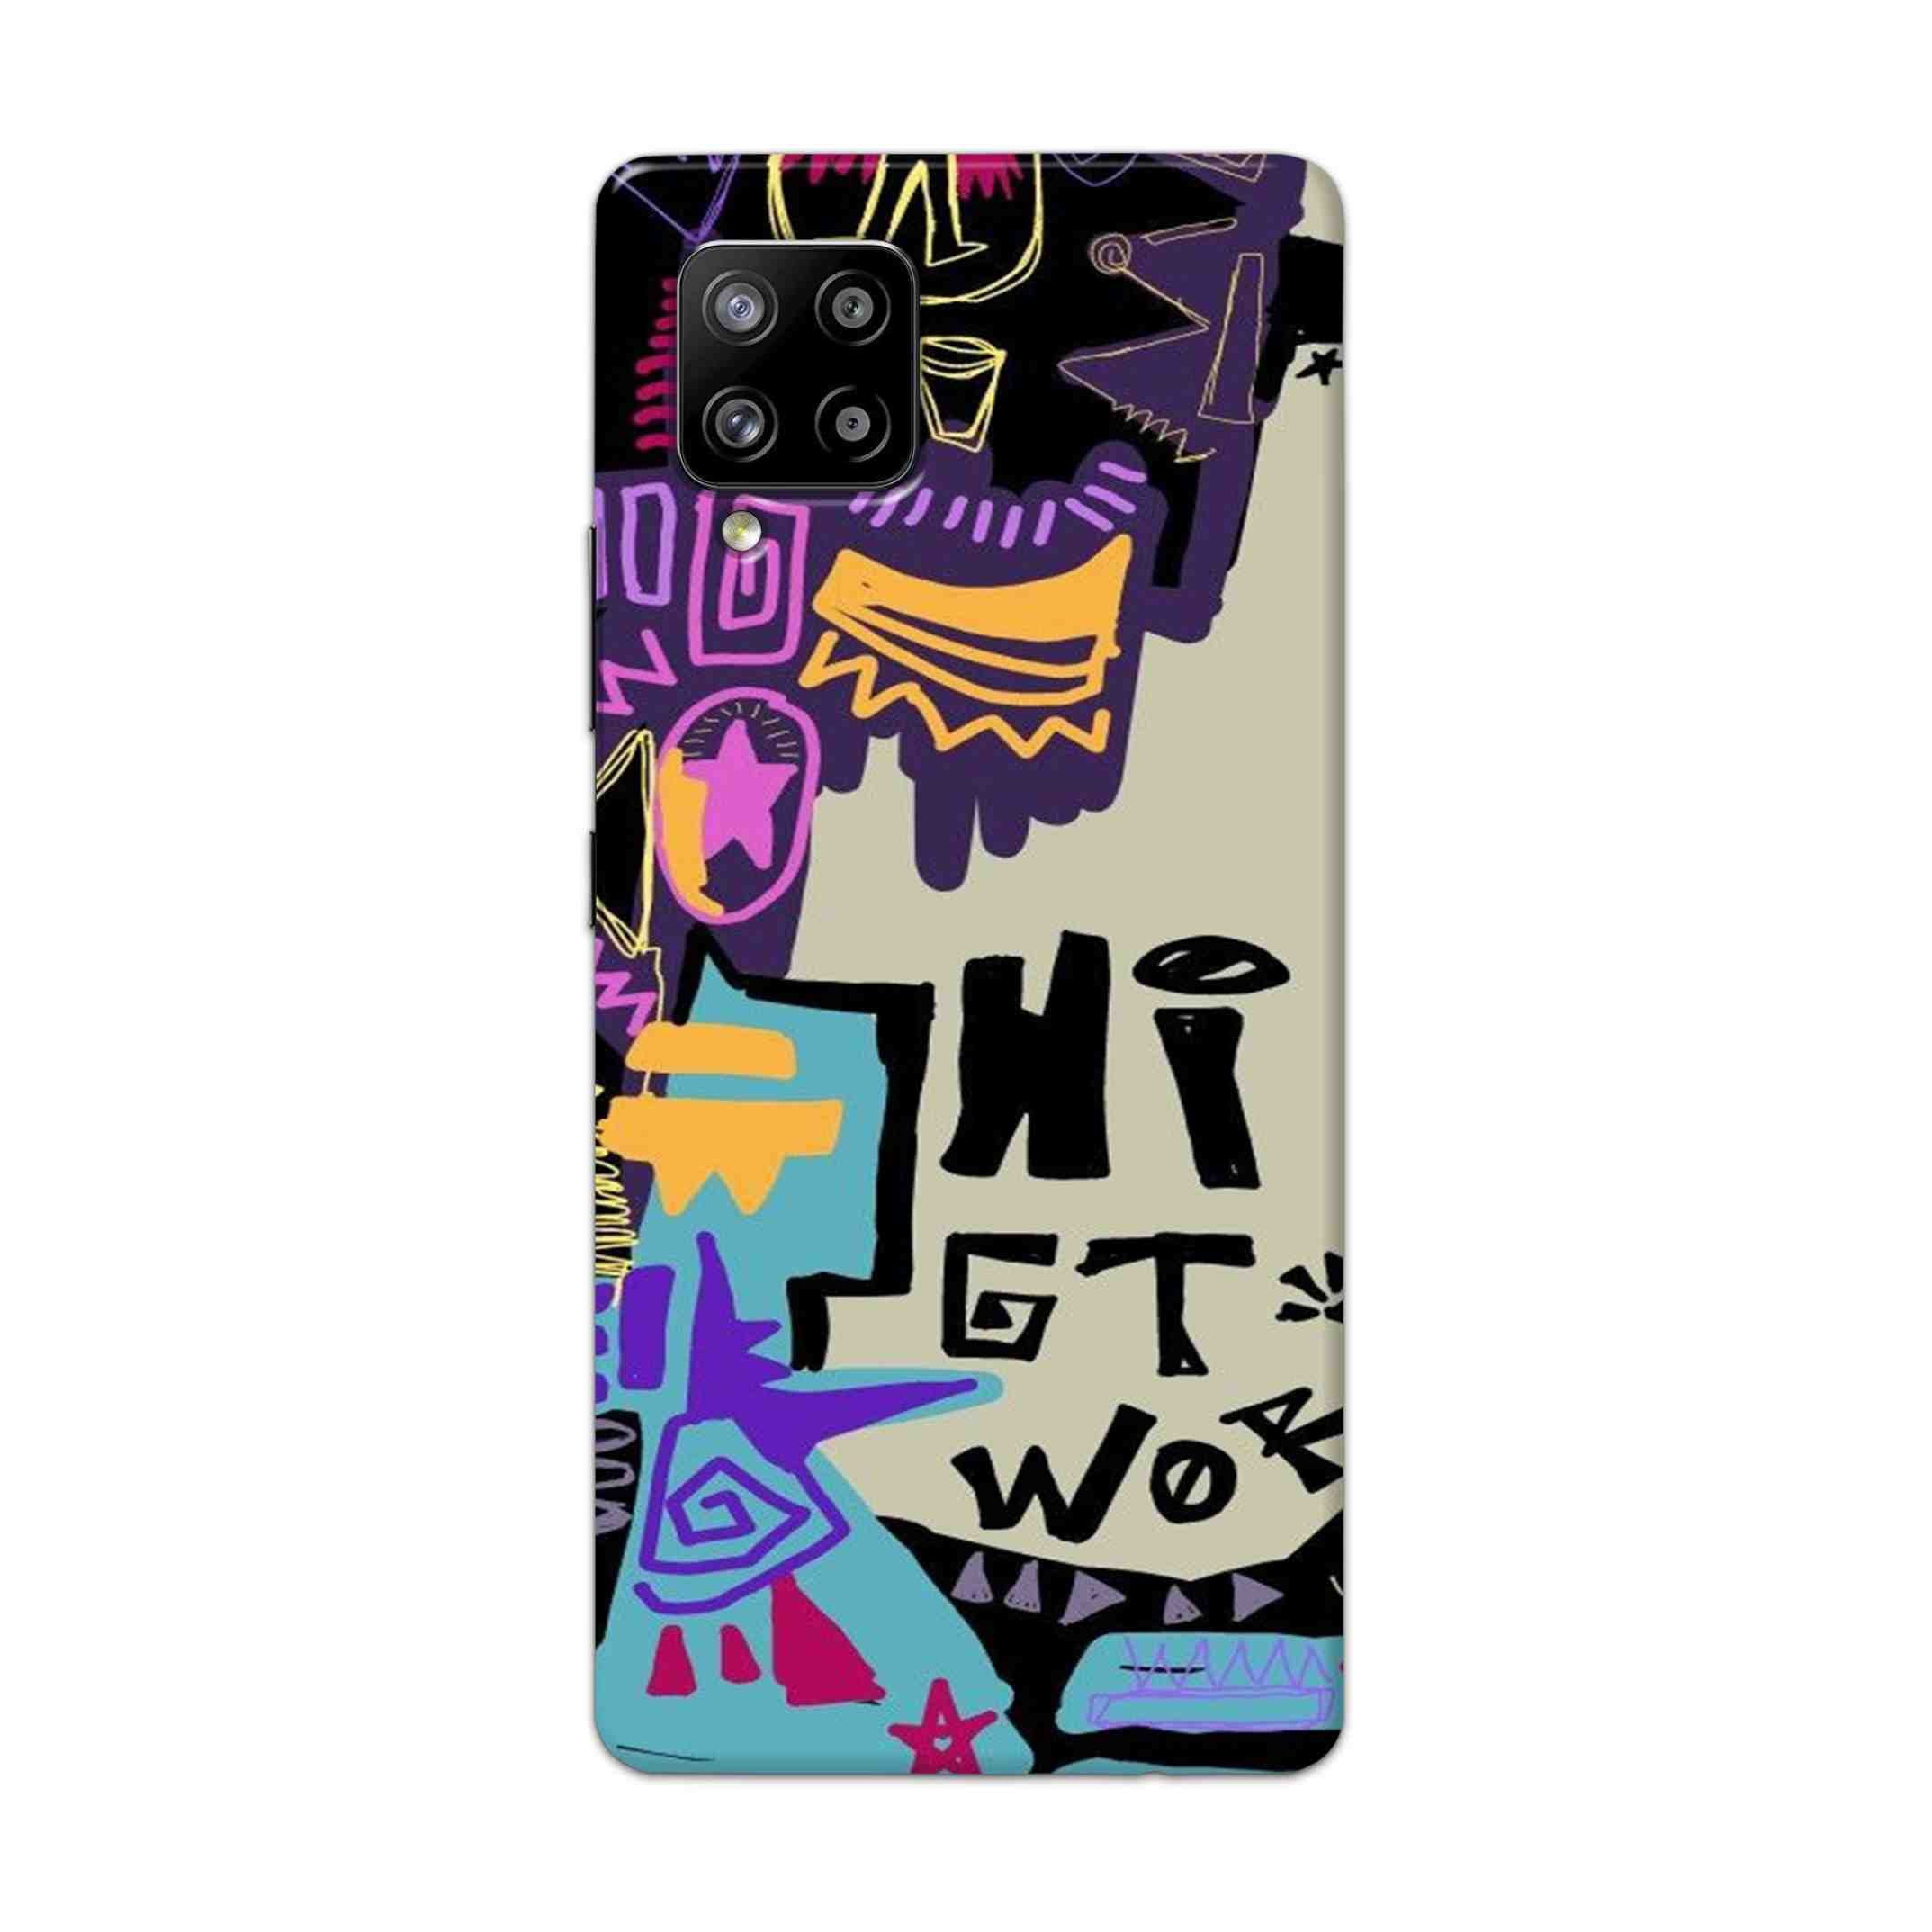 Buy Hi Gt World Hard Back Mobile Phone Case Cover For Samsung Galaxy M42 Online